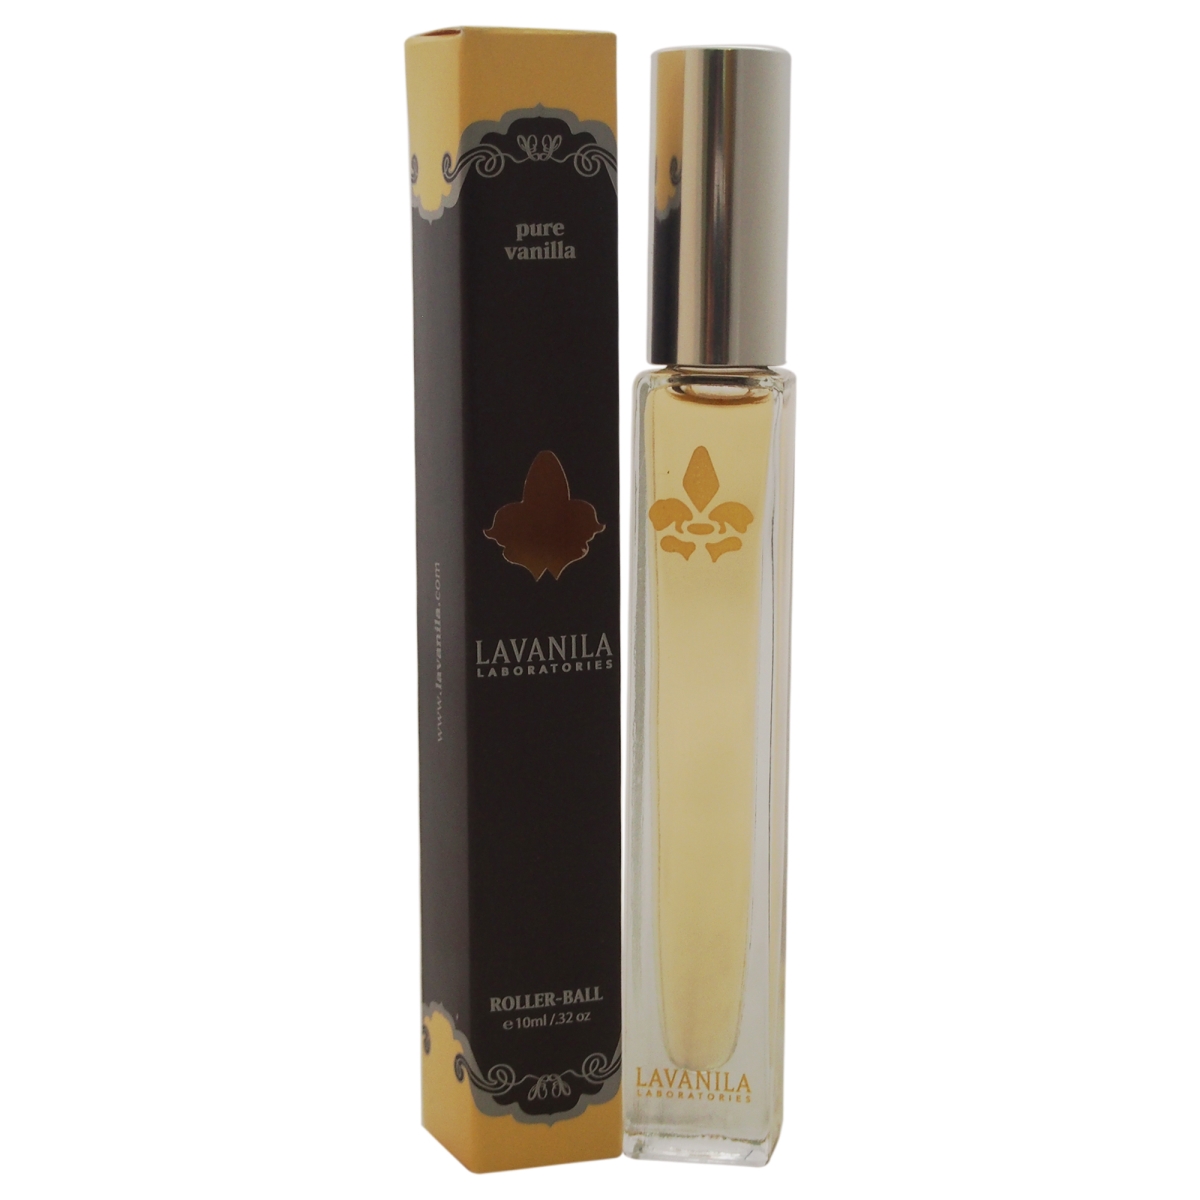 W-m-1571 0.32 Oz The Healthy Fragrance - Pure Vanilla Roller-ball Mini For Women